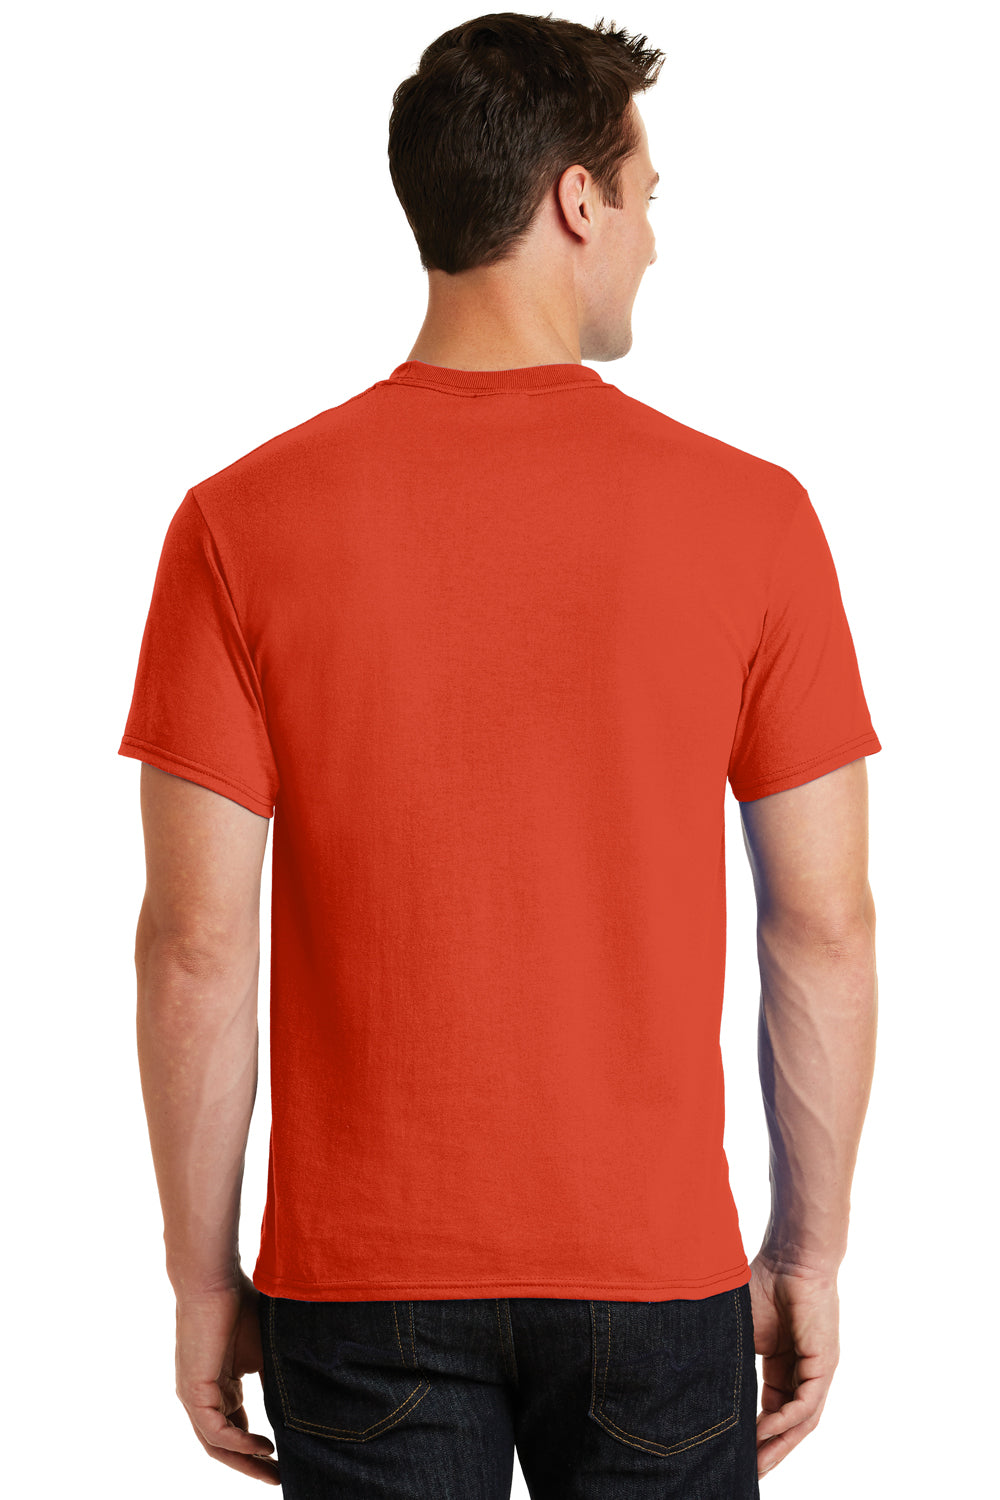 Port & Company PC55 Mens Core Short Sleeve Crewneck T-Shirt Orange Back